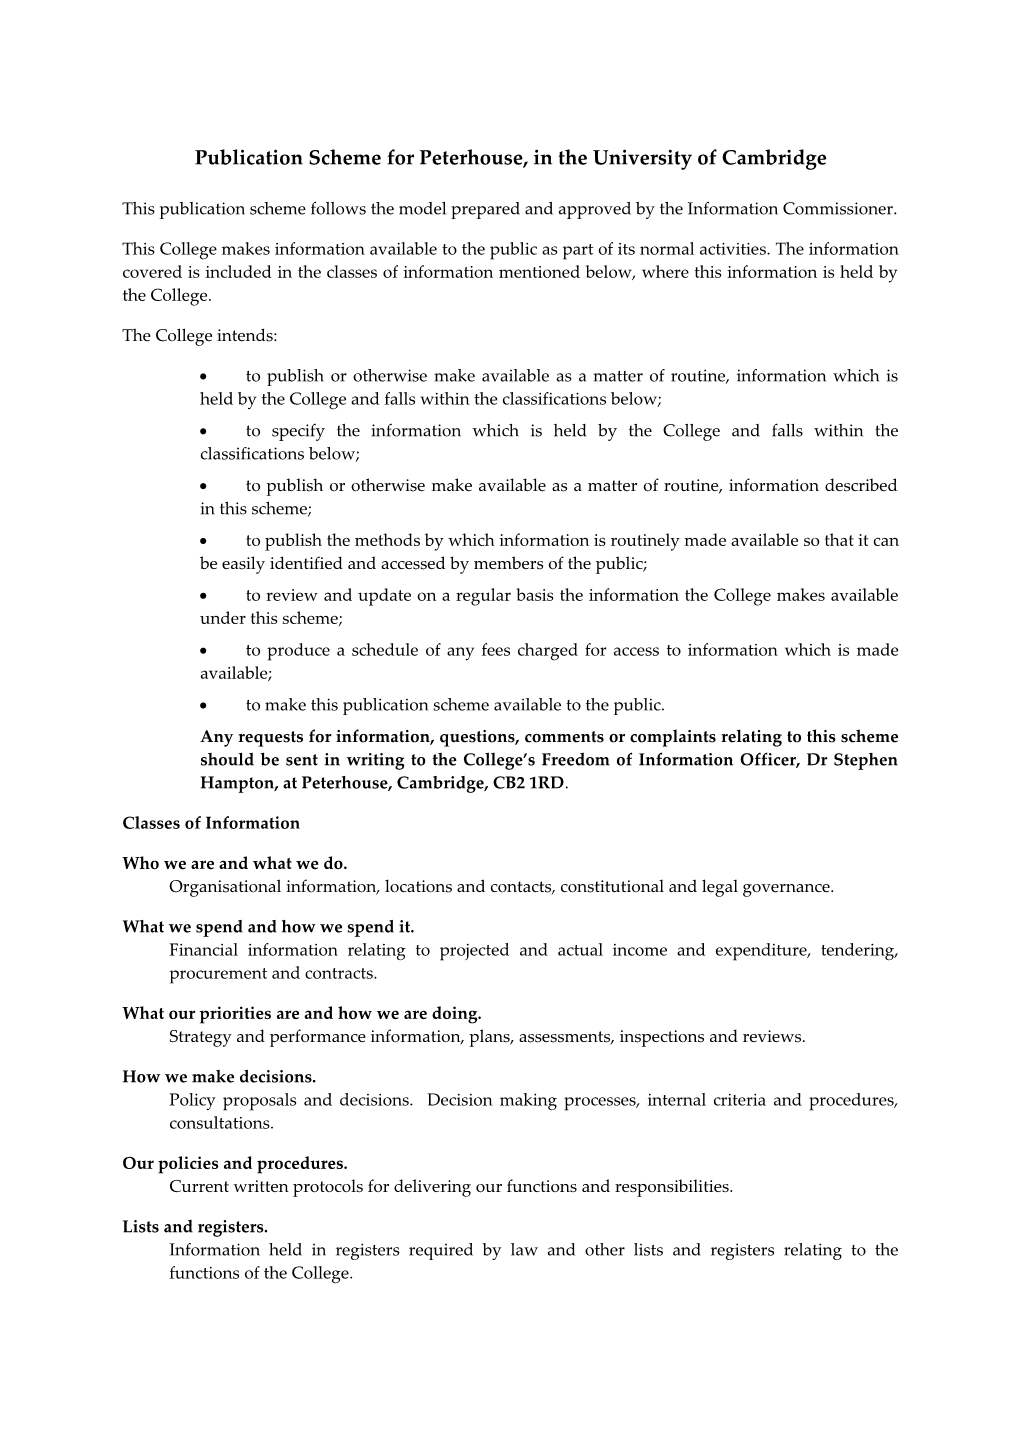 Publication Scheme for Peterhouse in the University of Cambridge